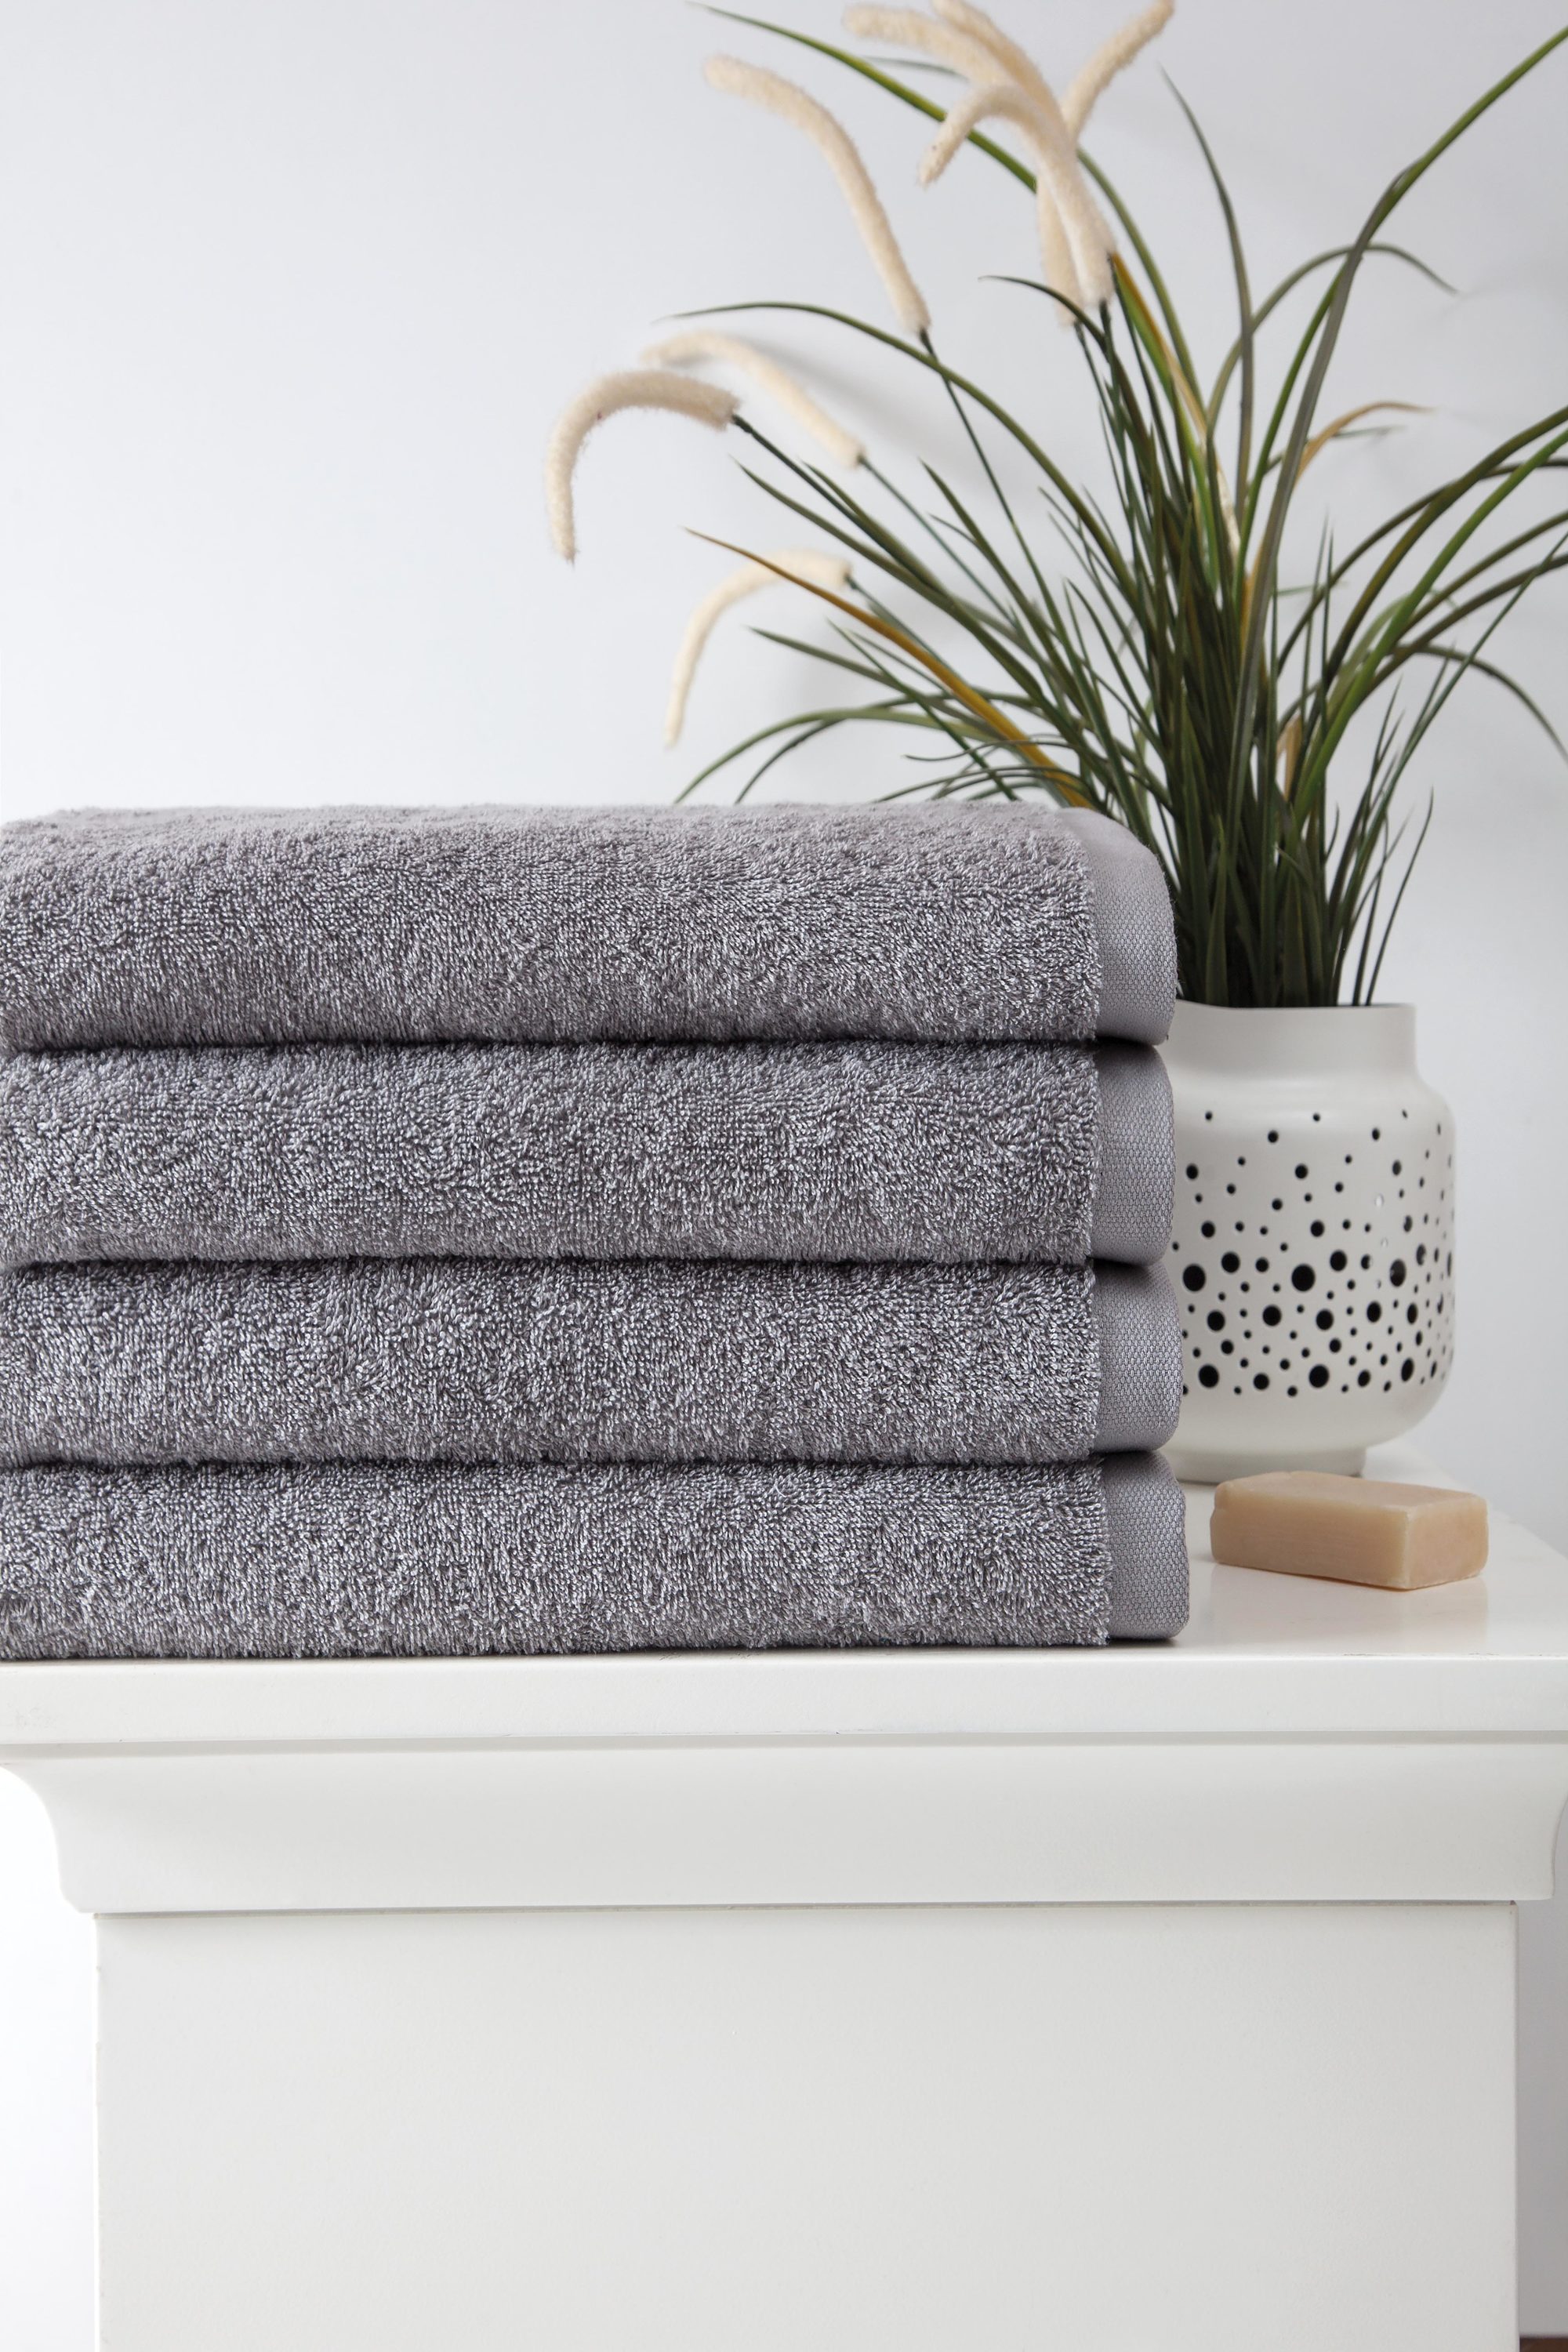 Ozan Premium Home Mirage Collection 54 x 27 Turkish Cotton Luxury Bath  Towel